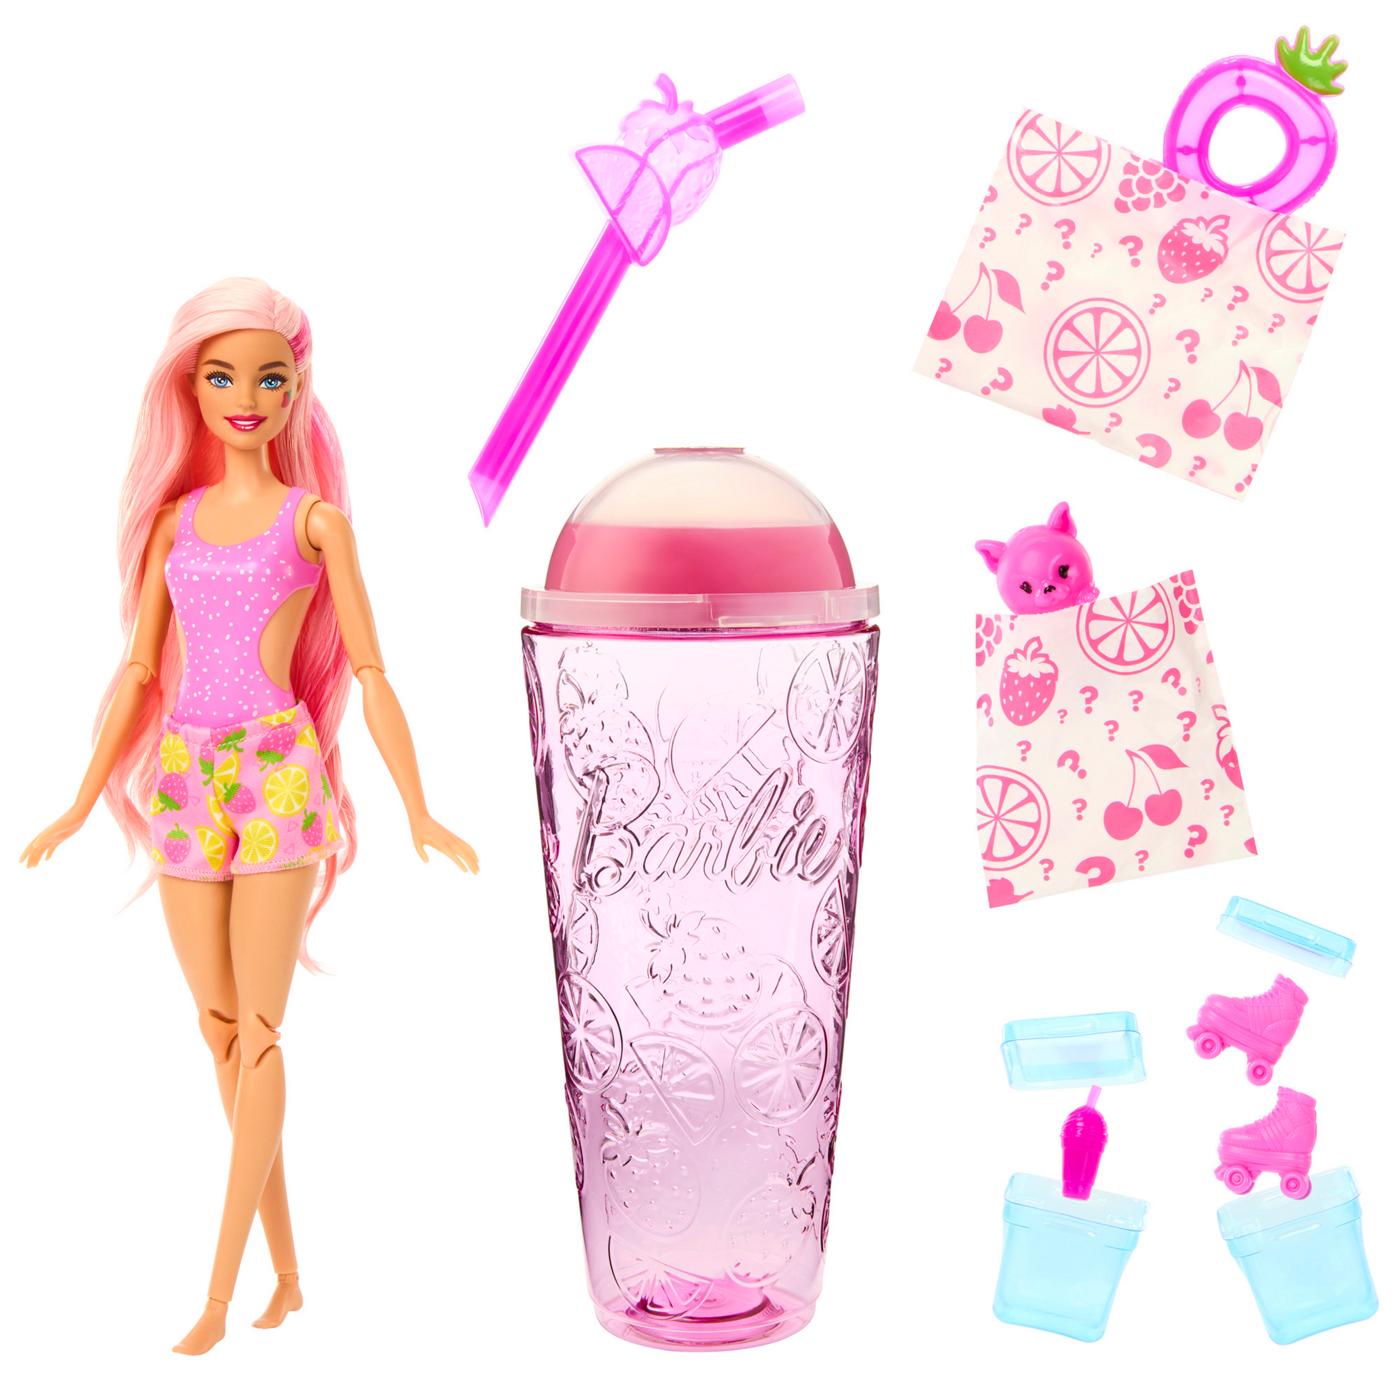 Barbie Pop Reveal Fruit Series Doll - Strawberry Lemonade - Shop Action  Figures & Dolls at H-E-B